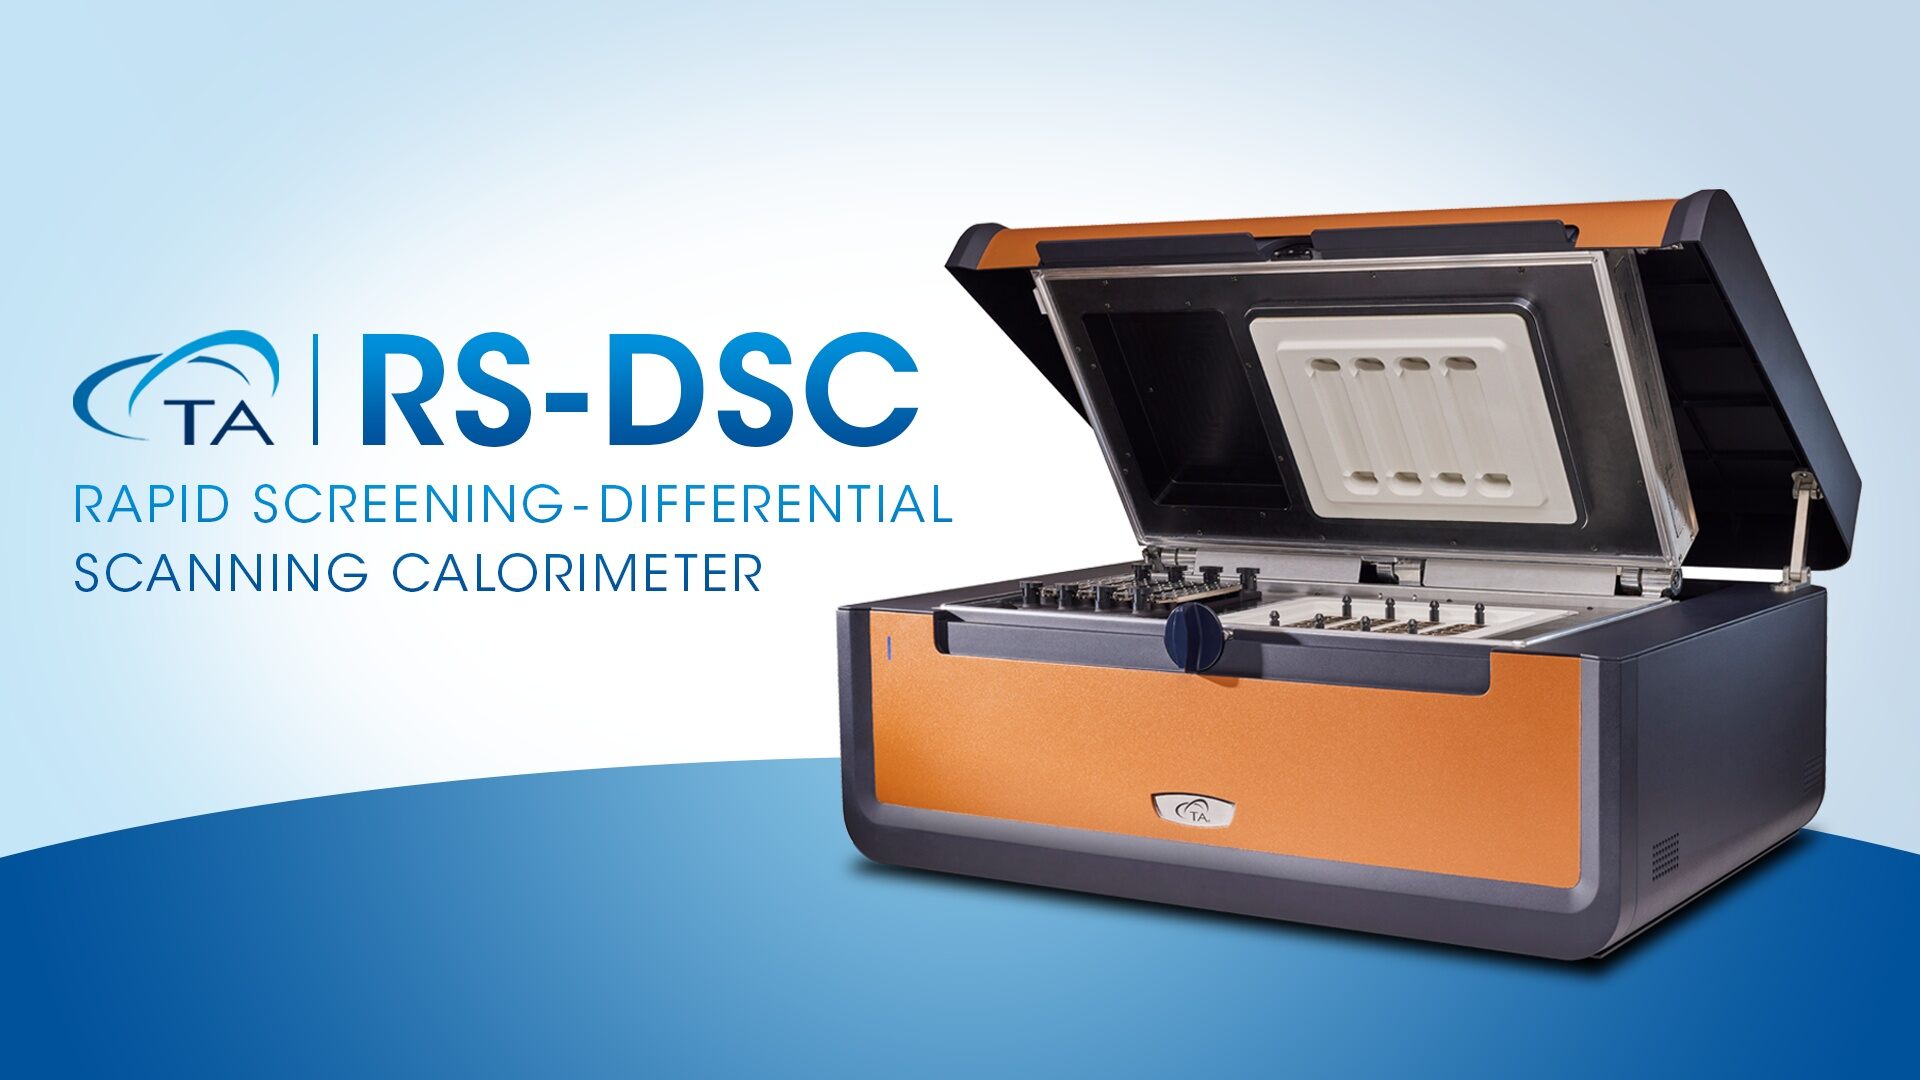 TA Instruments Rapid Screening Differential Scanning Calorimeter Product Video